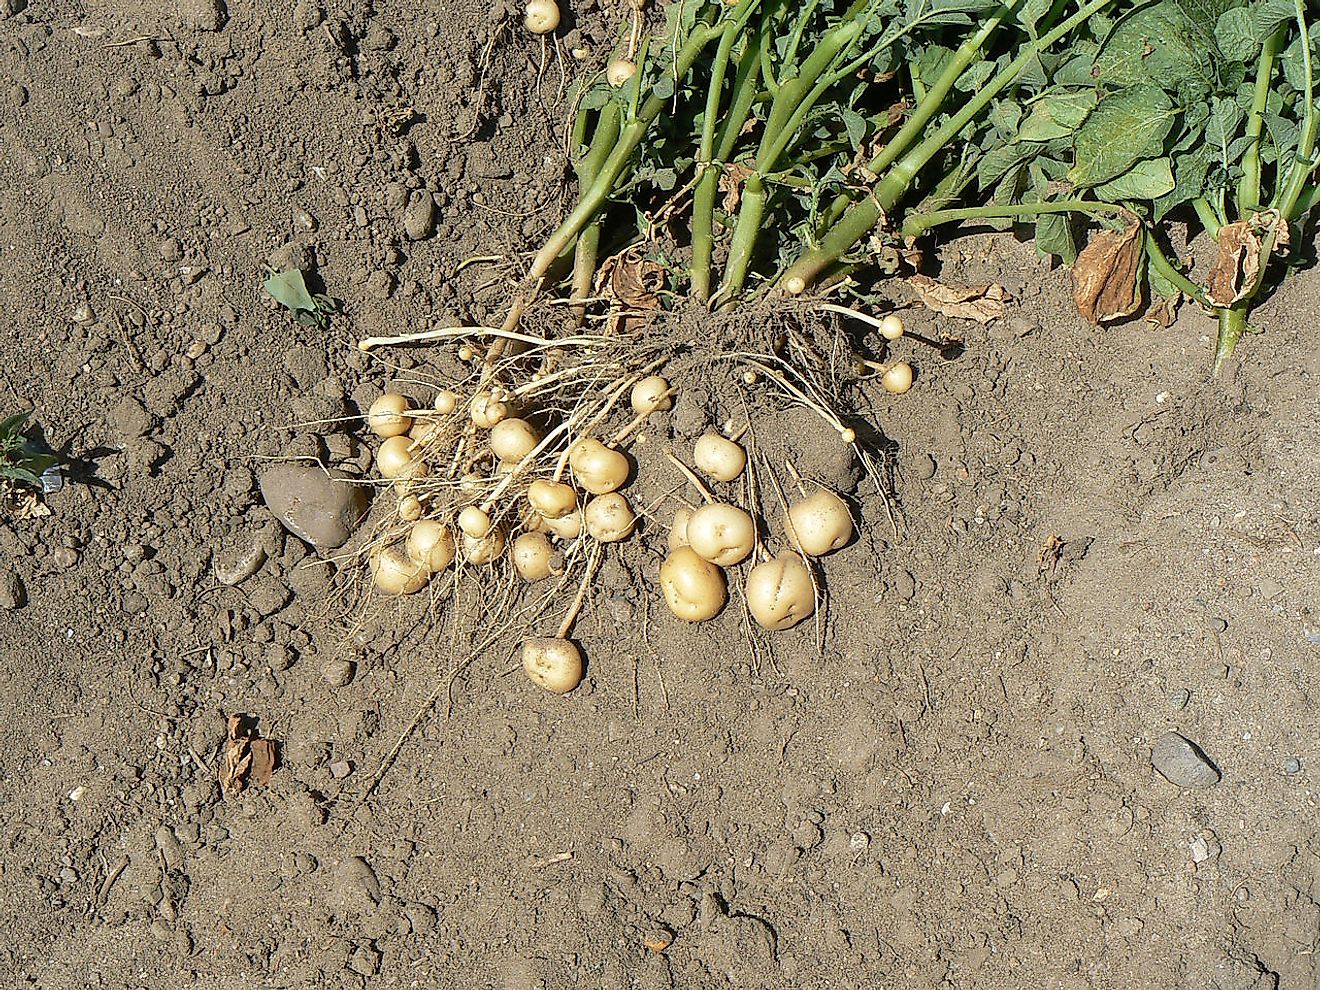 Potato plant with revealed tubers. Image credit: BASFPlantScience/Wikimedia.org